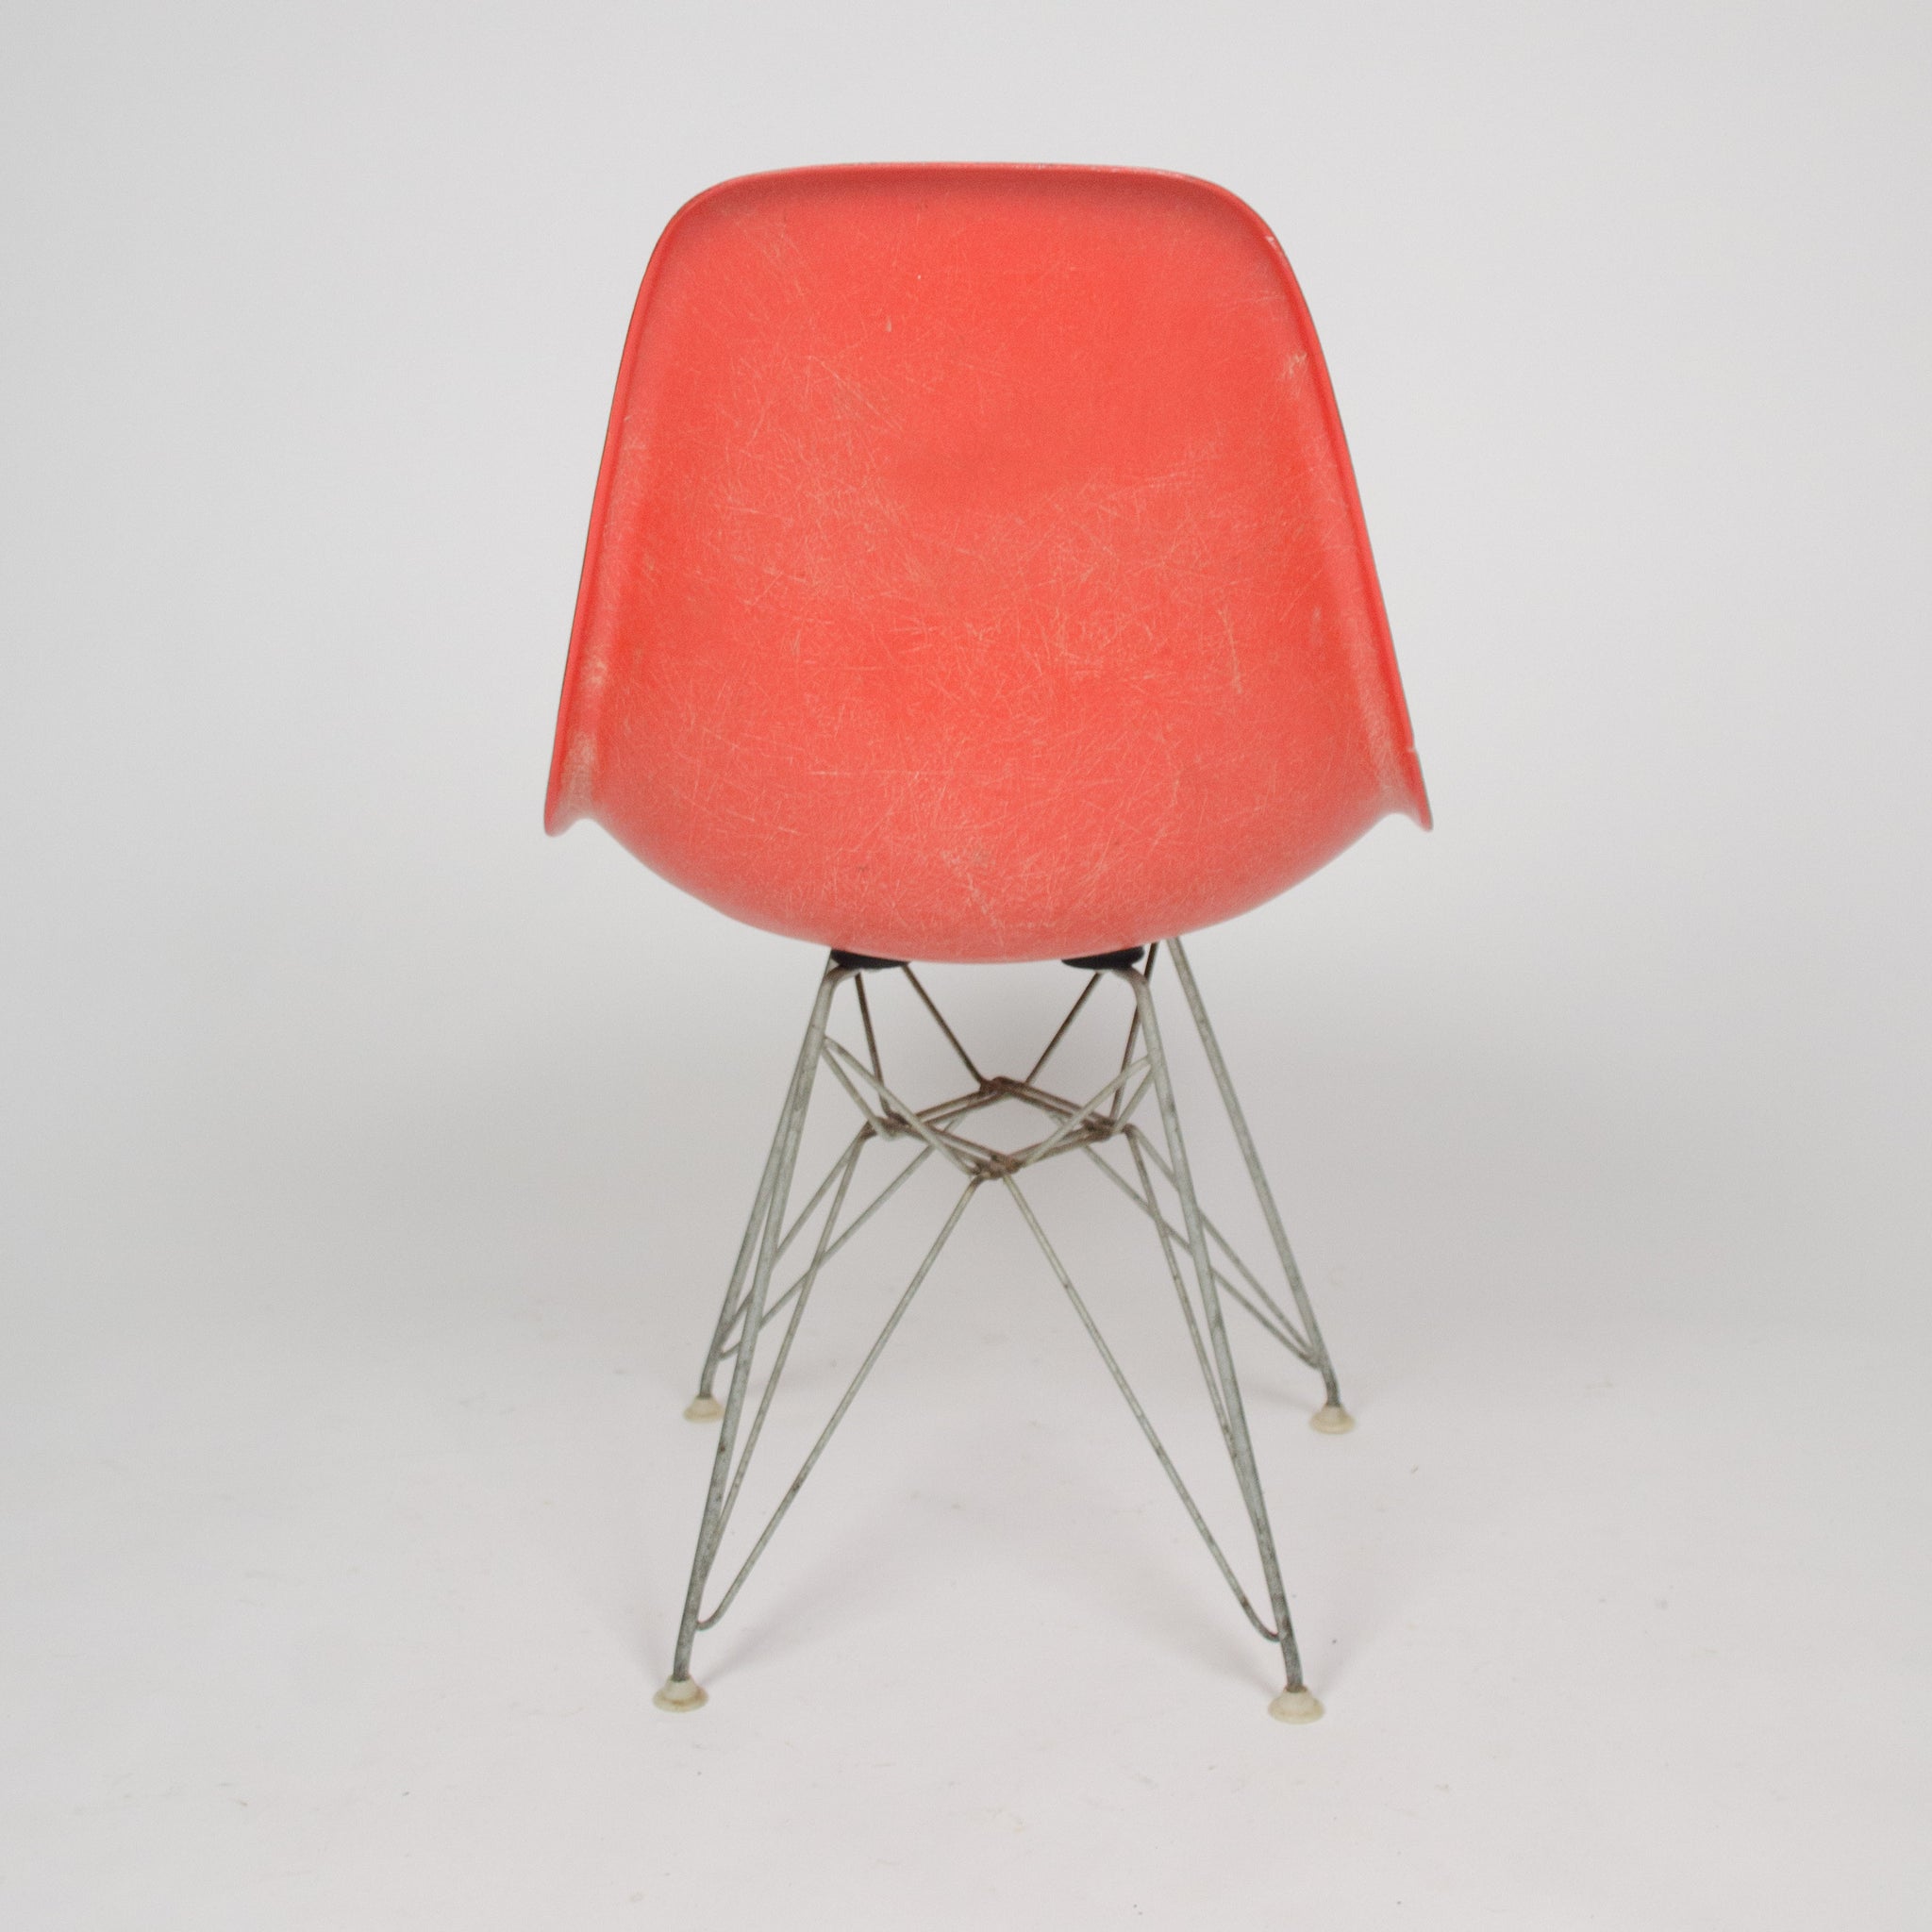 SOLD Herman Miller Eames Pair of Original Eiffel Tower Fiberglass Shell Chairs Red